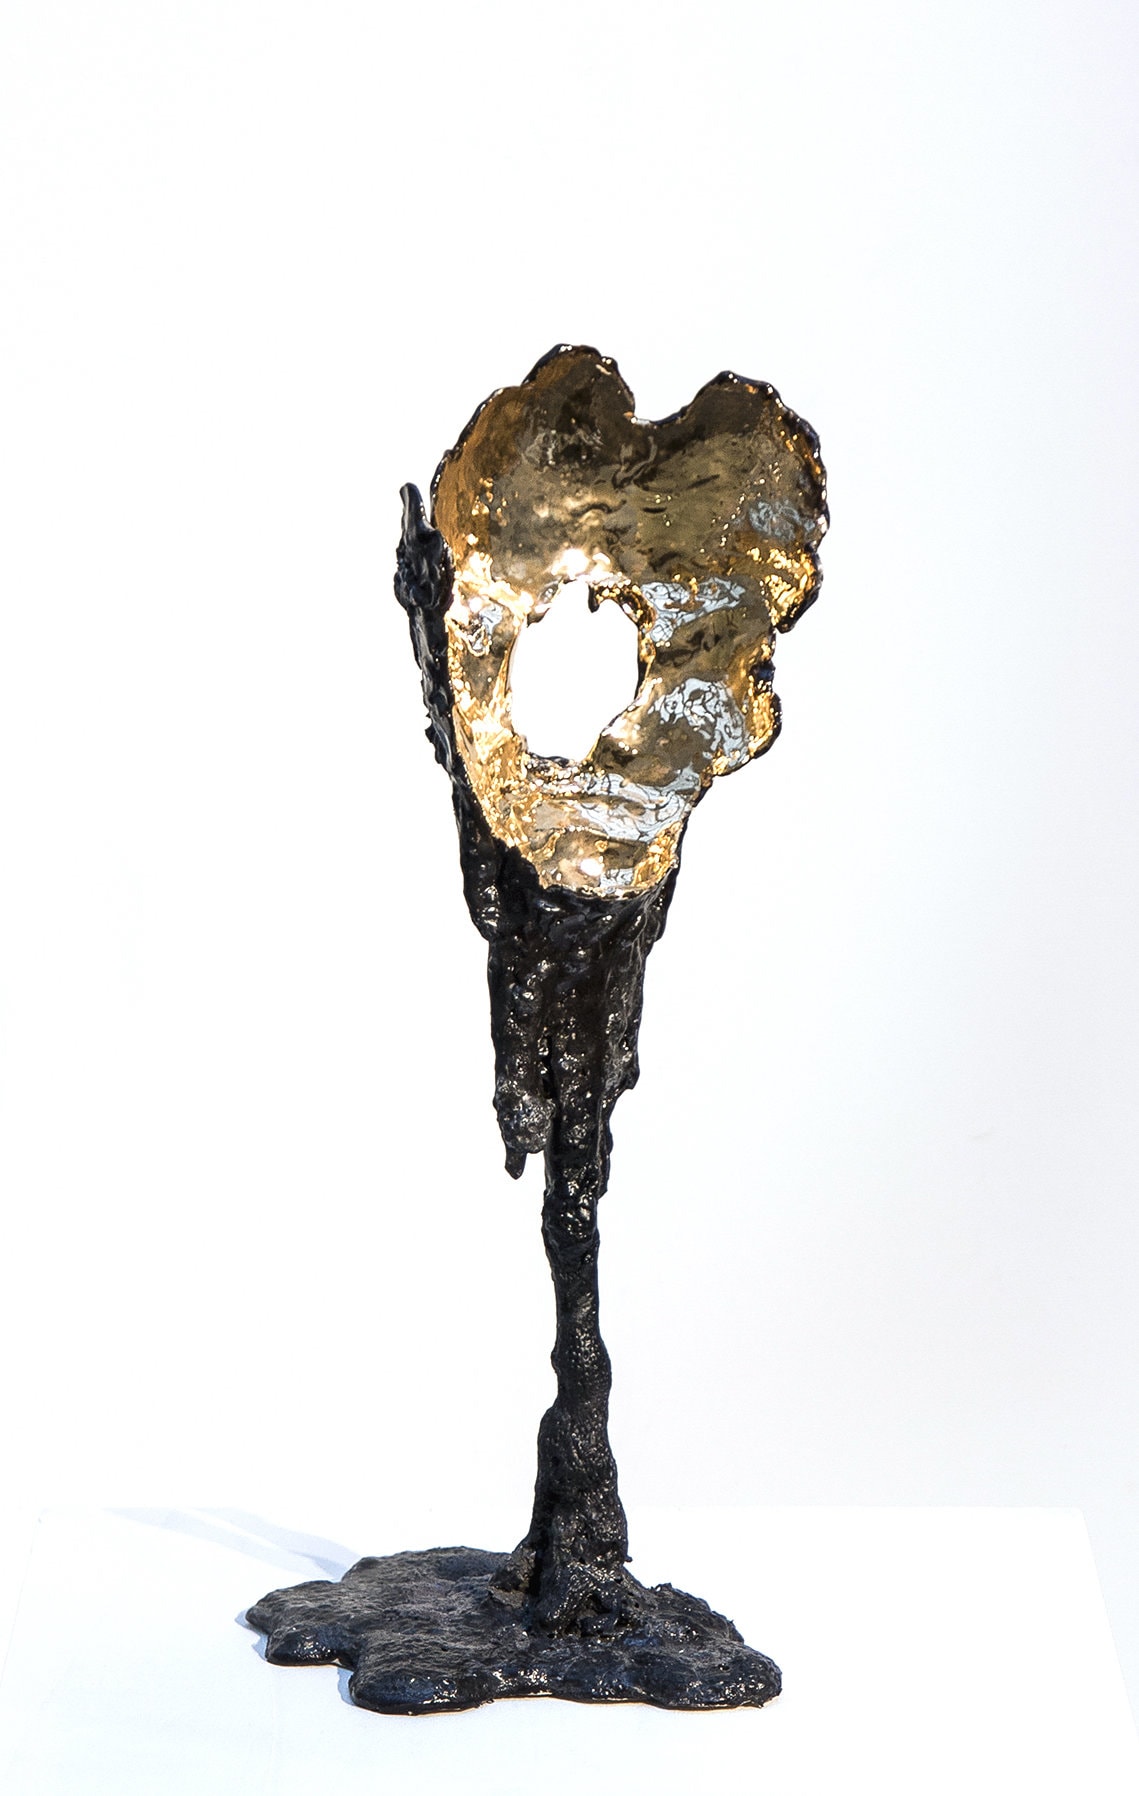 Samuel Yal, Magma, Grès, émail, or, 45x22x22 cm, 2017